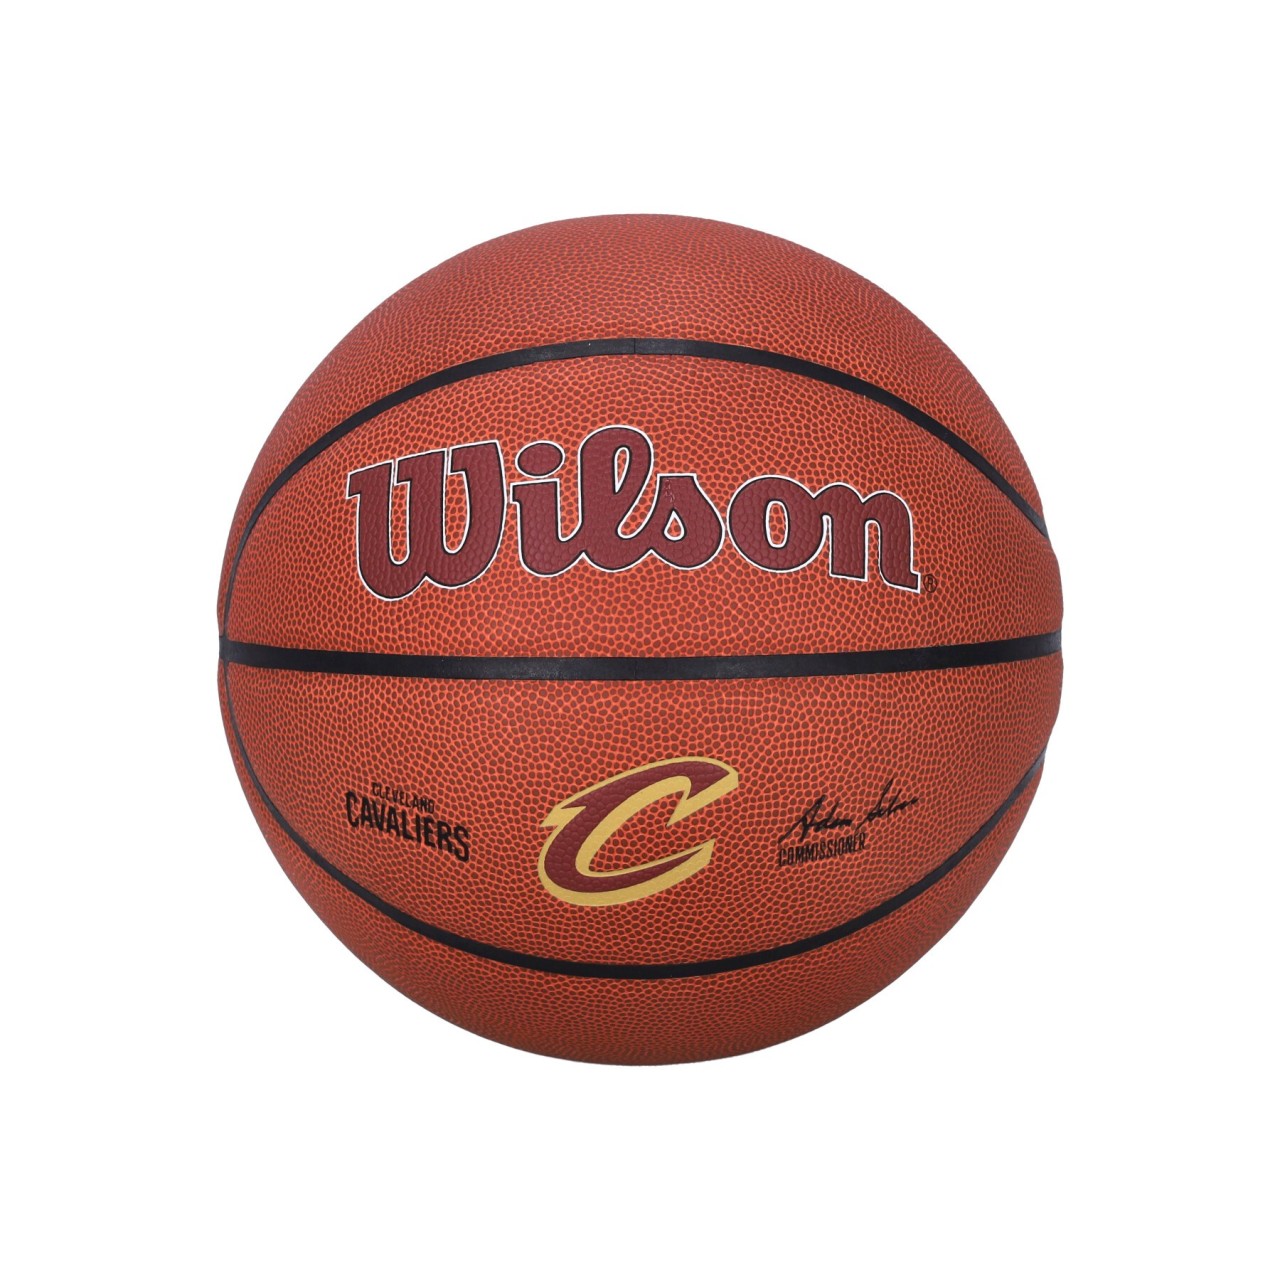 WILSON TEAM NBA TEAM ALLIANCE BASKETBALL SIZE 7 CLECAV WZ4011901XB7